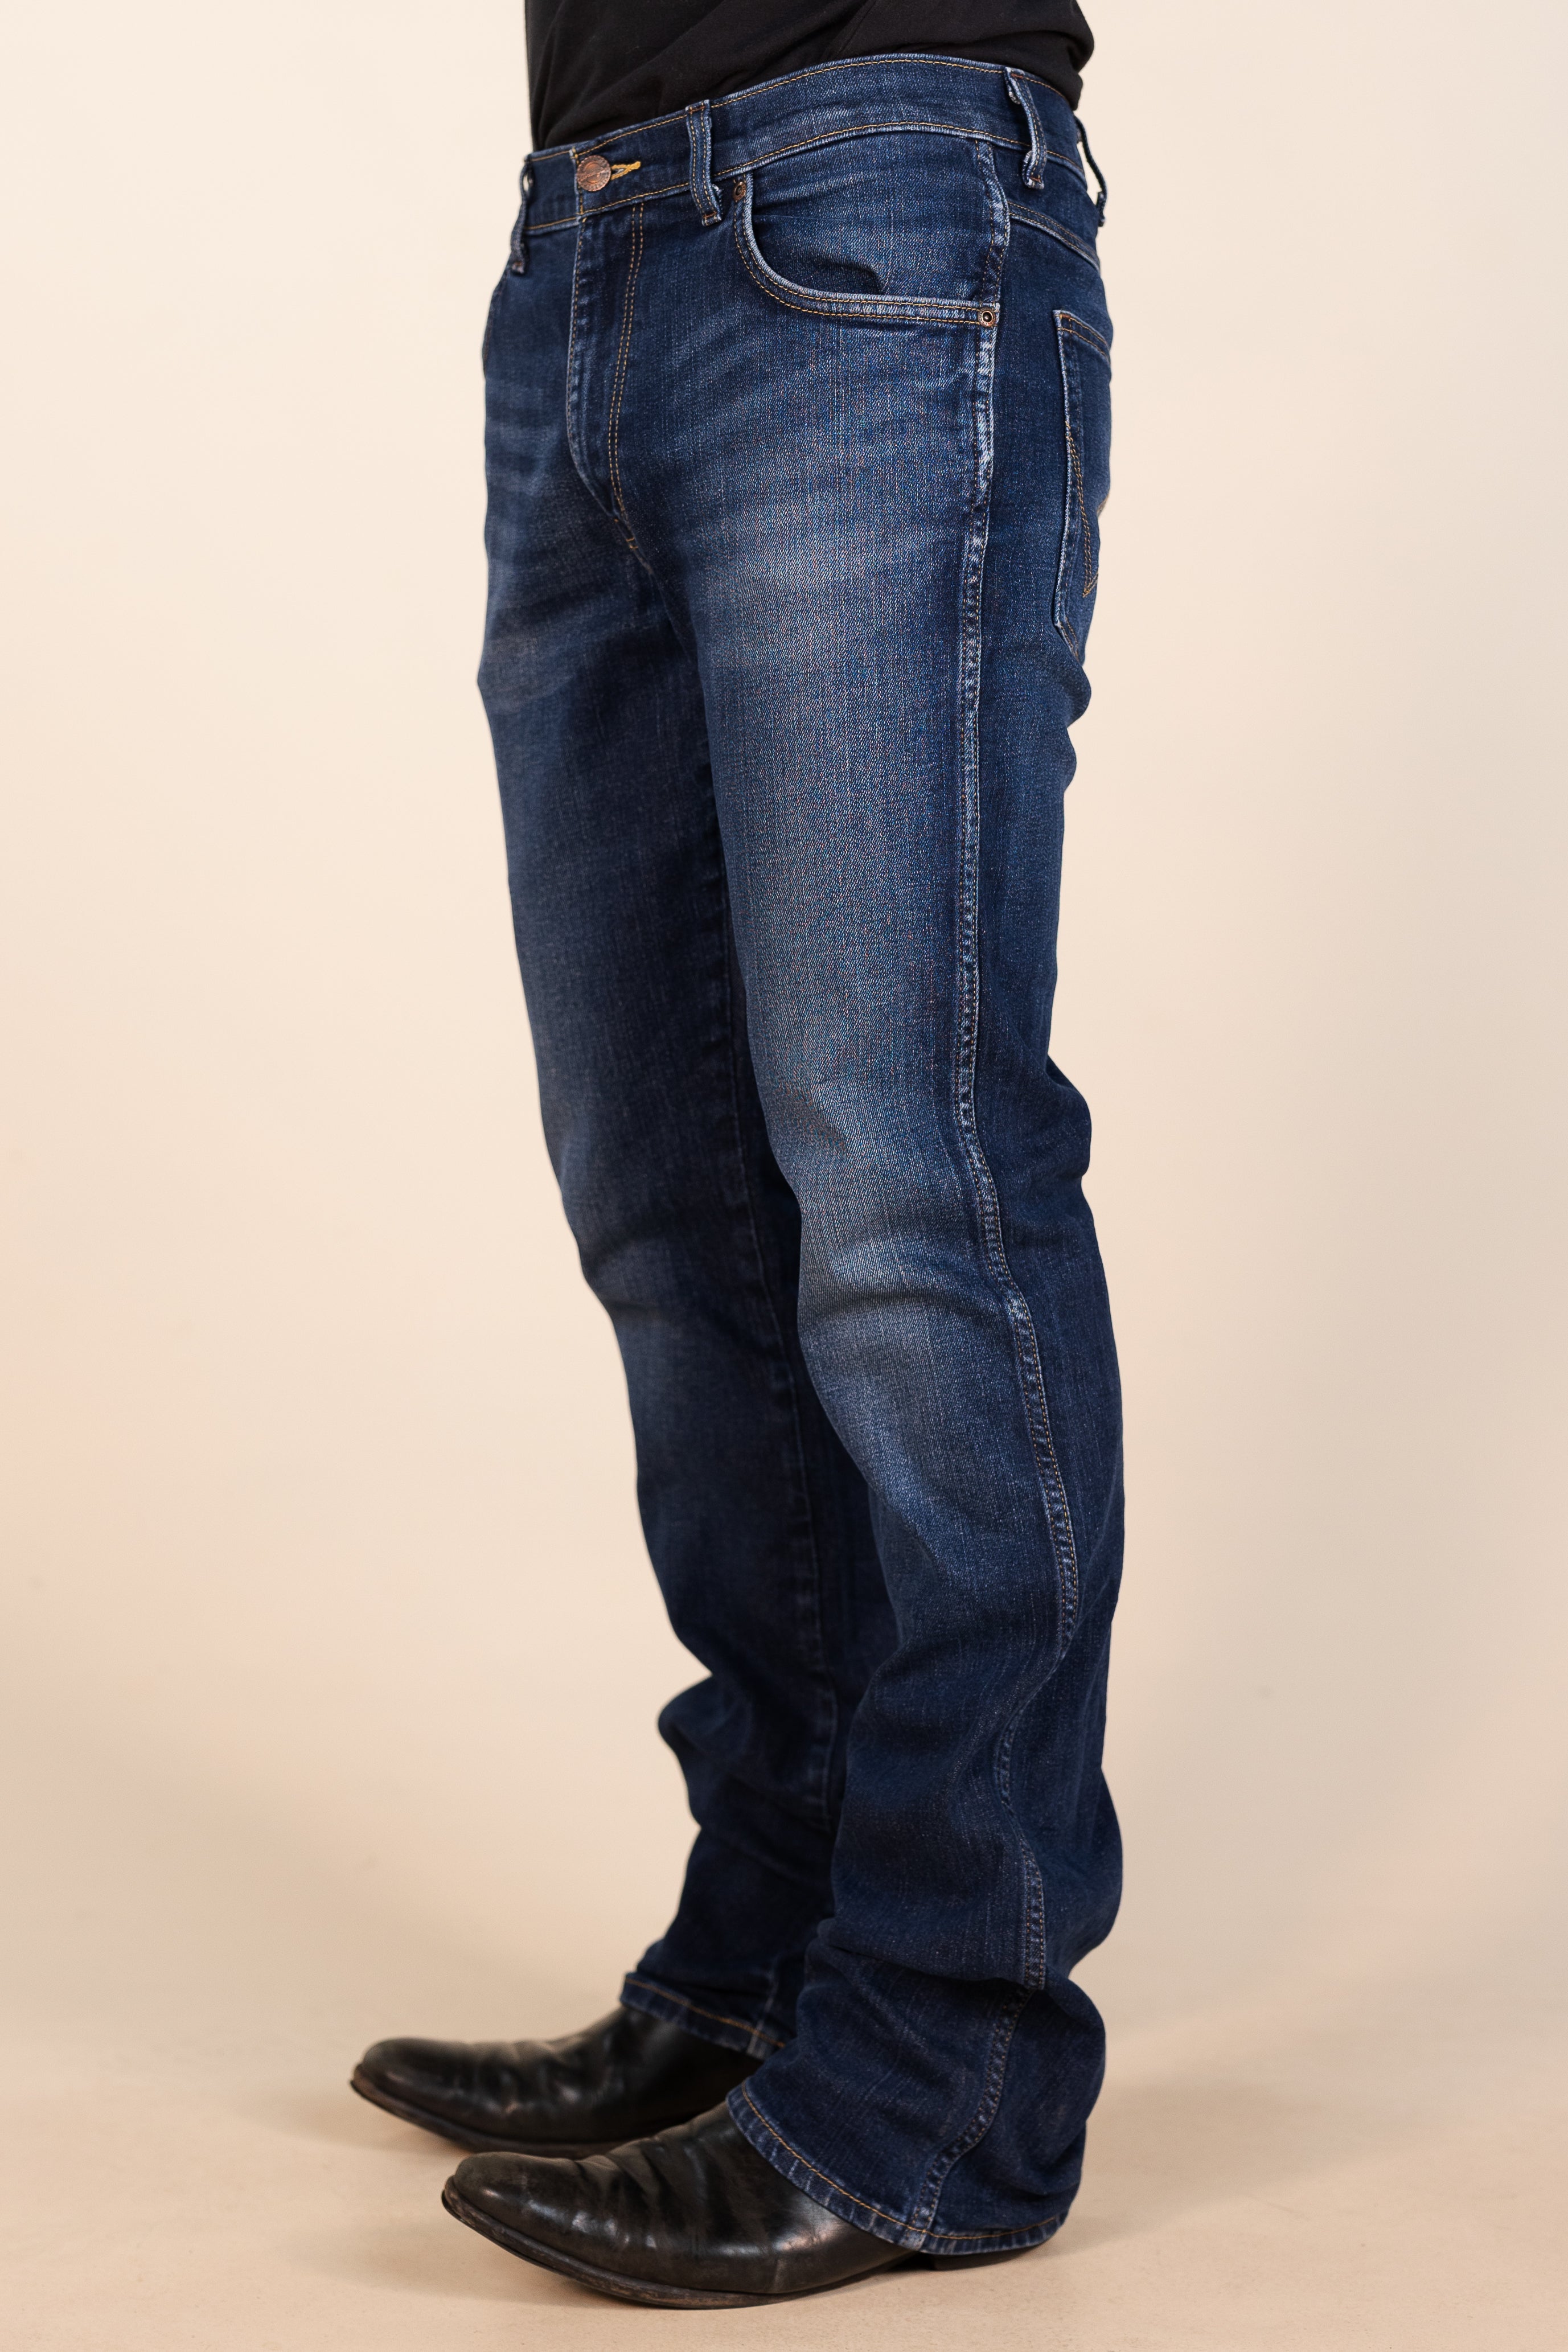 Wrangler 'Pittsboro' Jeans